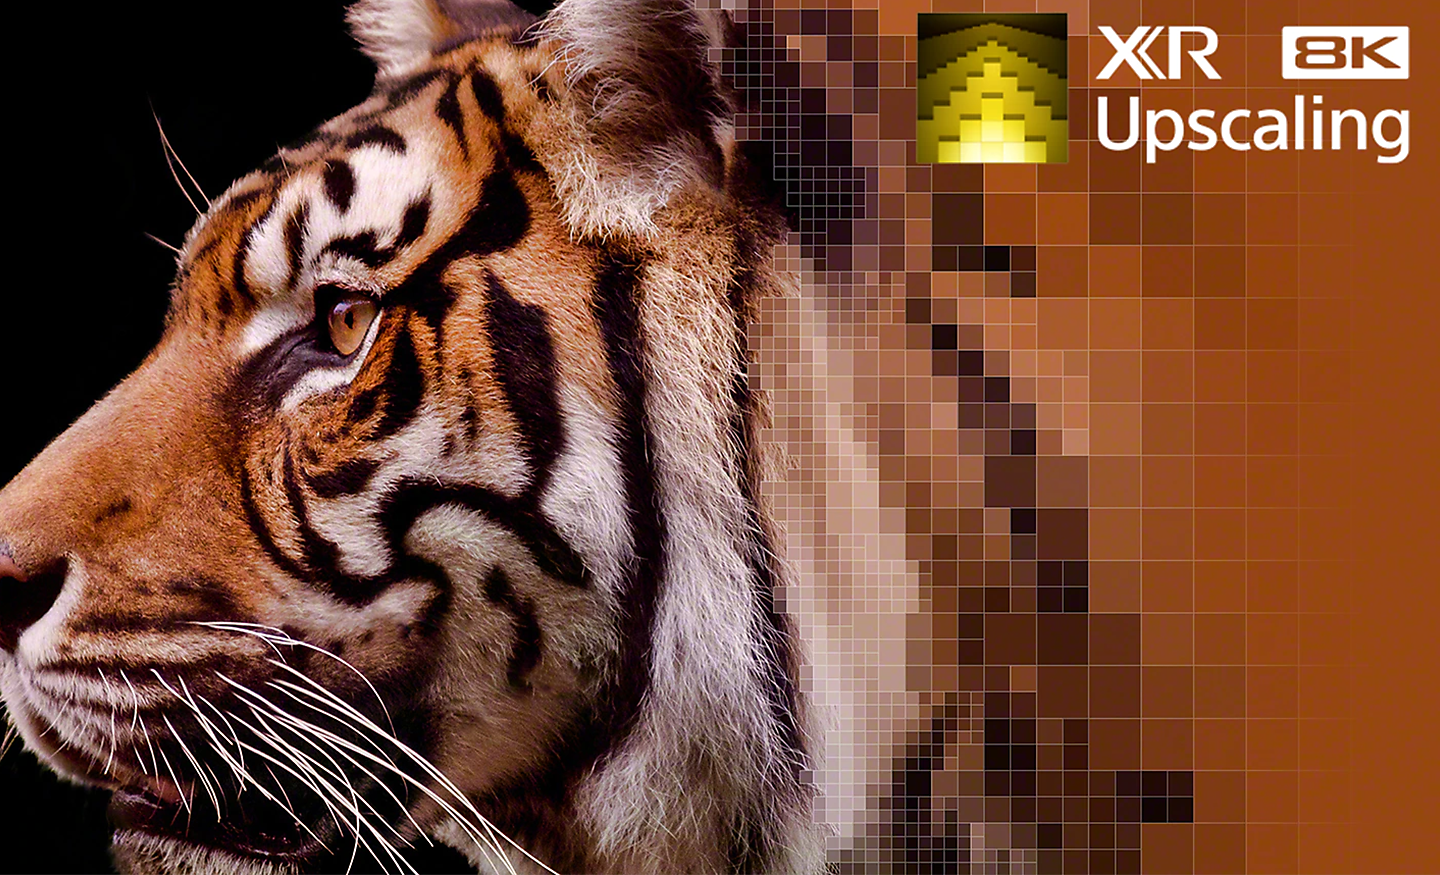 Primer plano de las marcas del pelaje de un tigre que muestra el efecto de XR 8K Upscaling